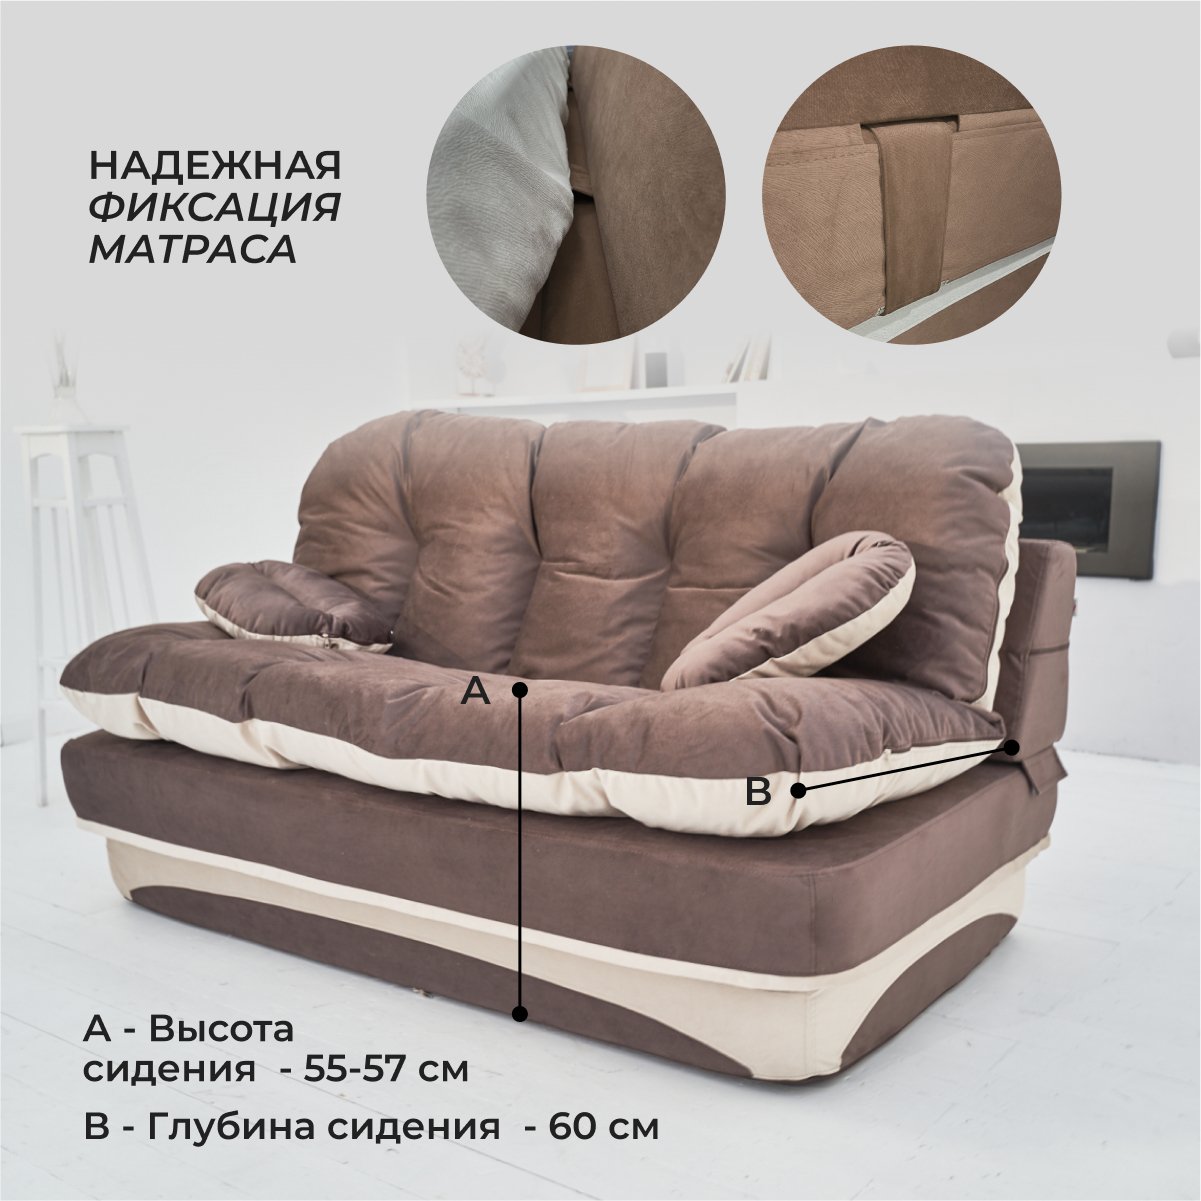 Диваны-кровати High Performance - купить диван-кровать High Performance, цены в Москве на Мегамаркет